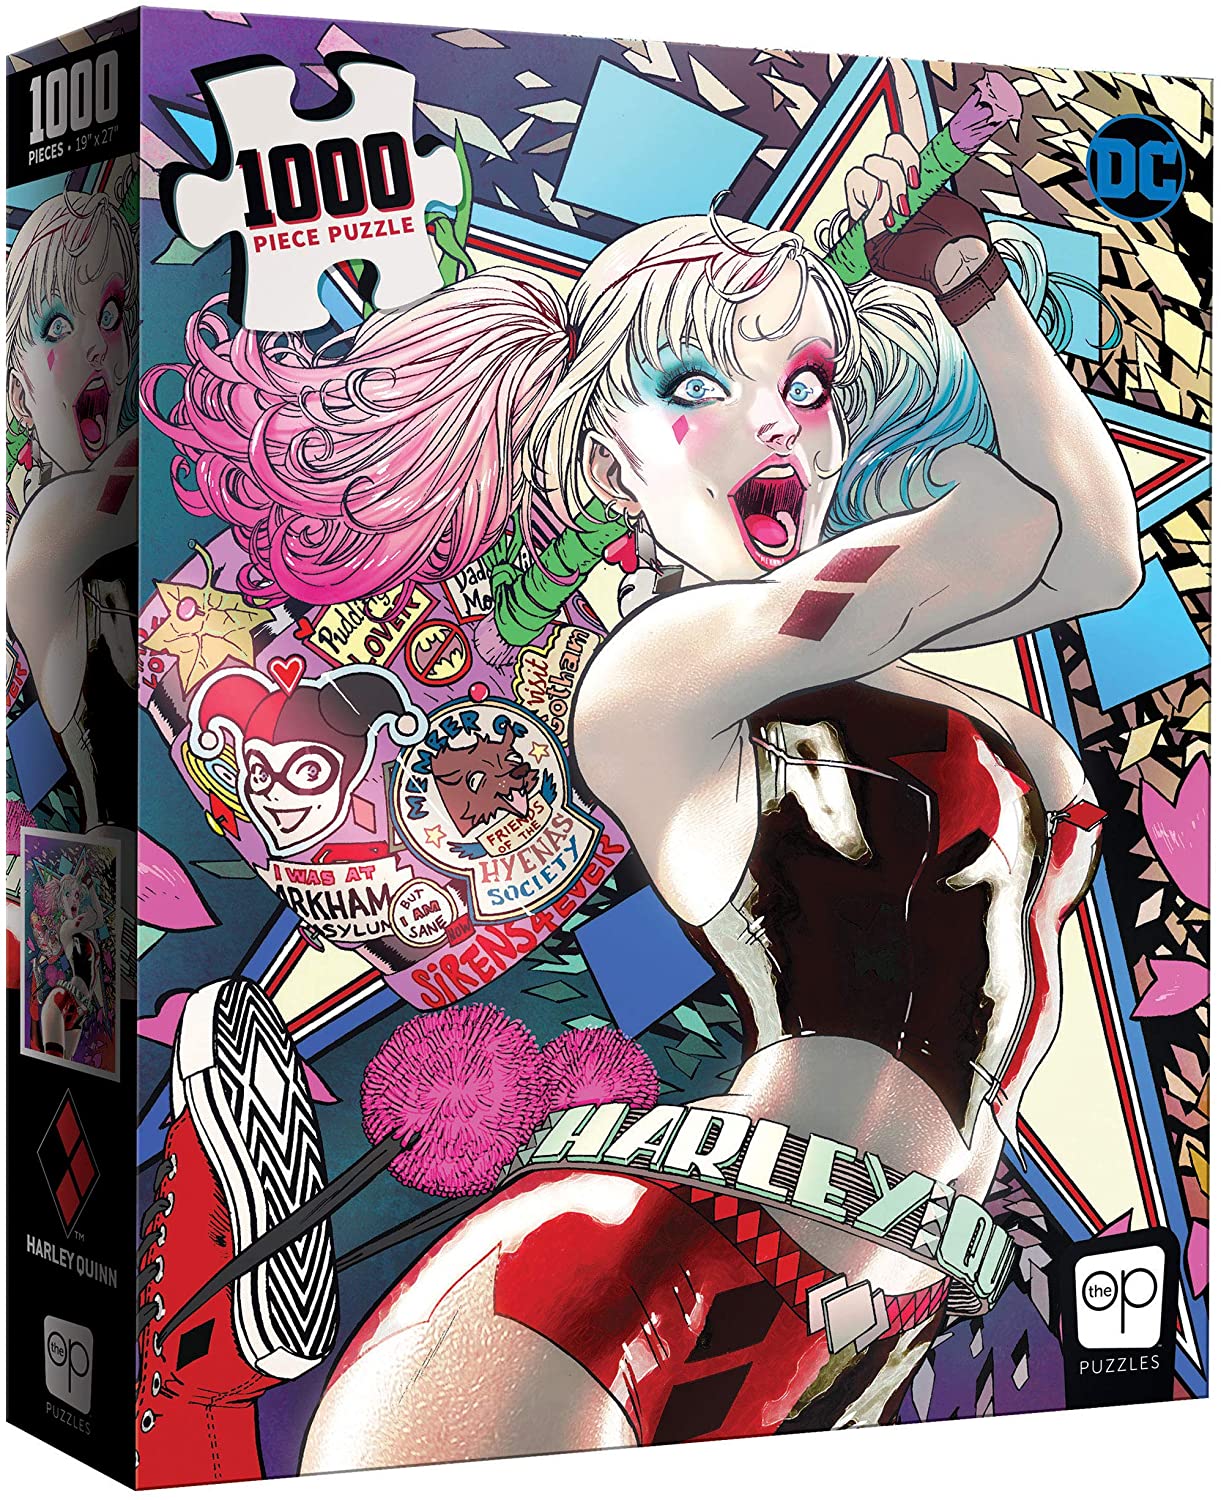 Harley Quinn: Die Laughing (1000 pc puzzle)